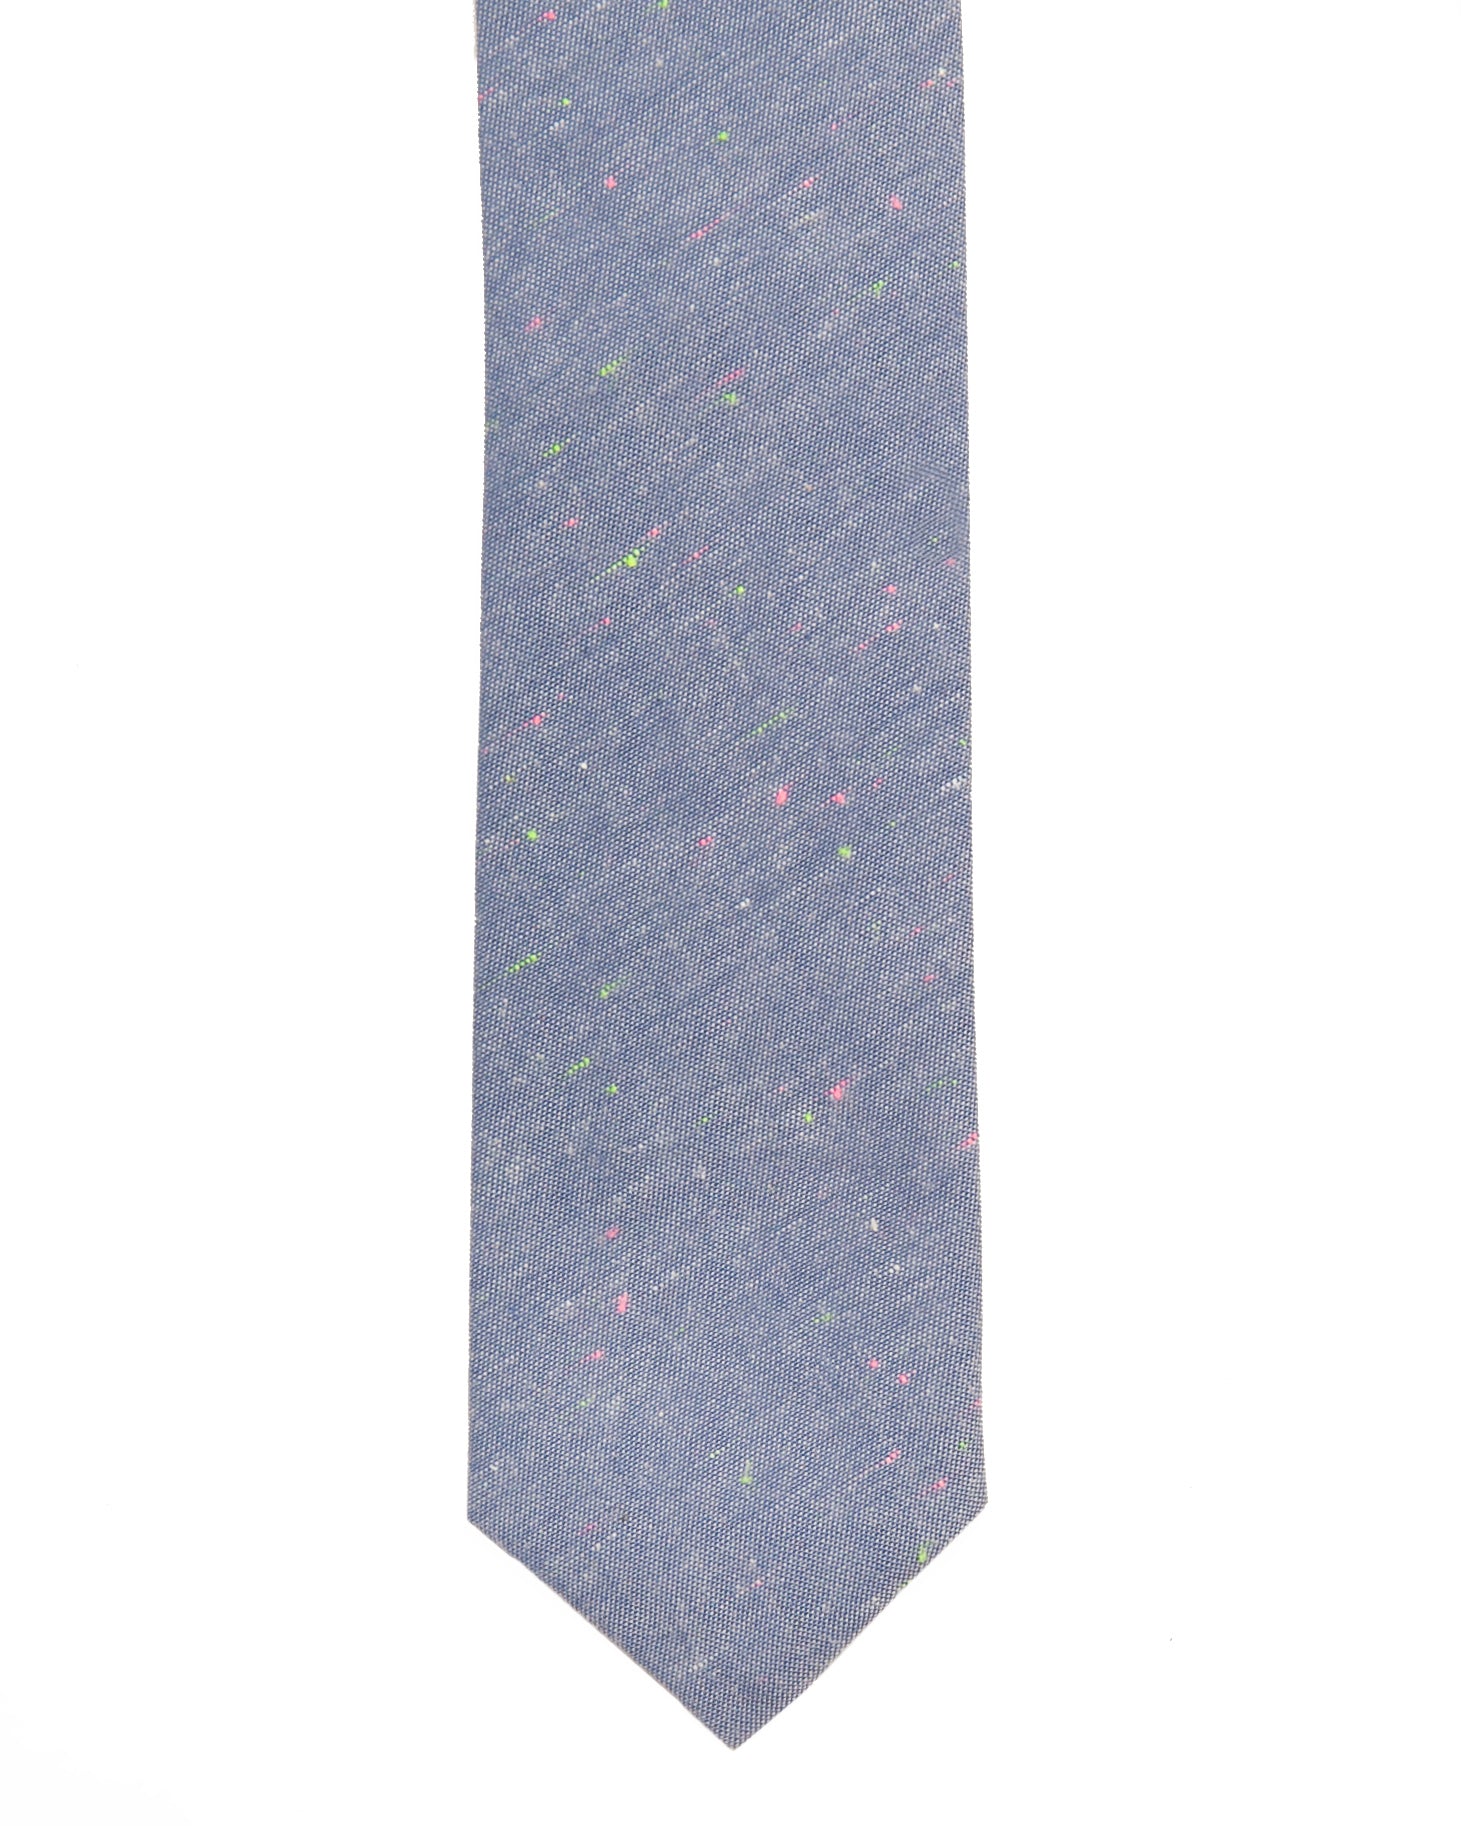 The Tie | Chambray Flecks (Blue)